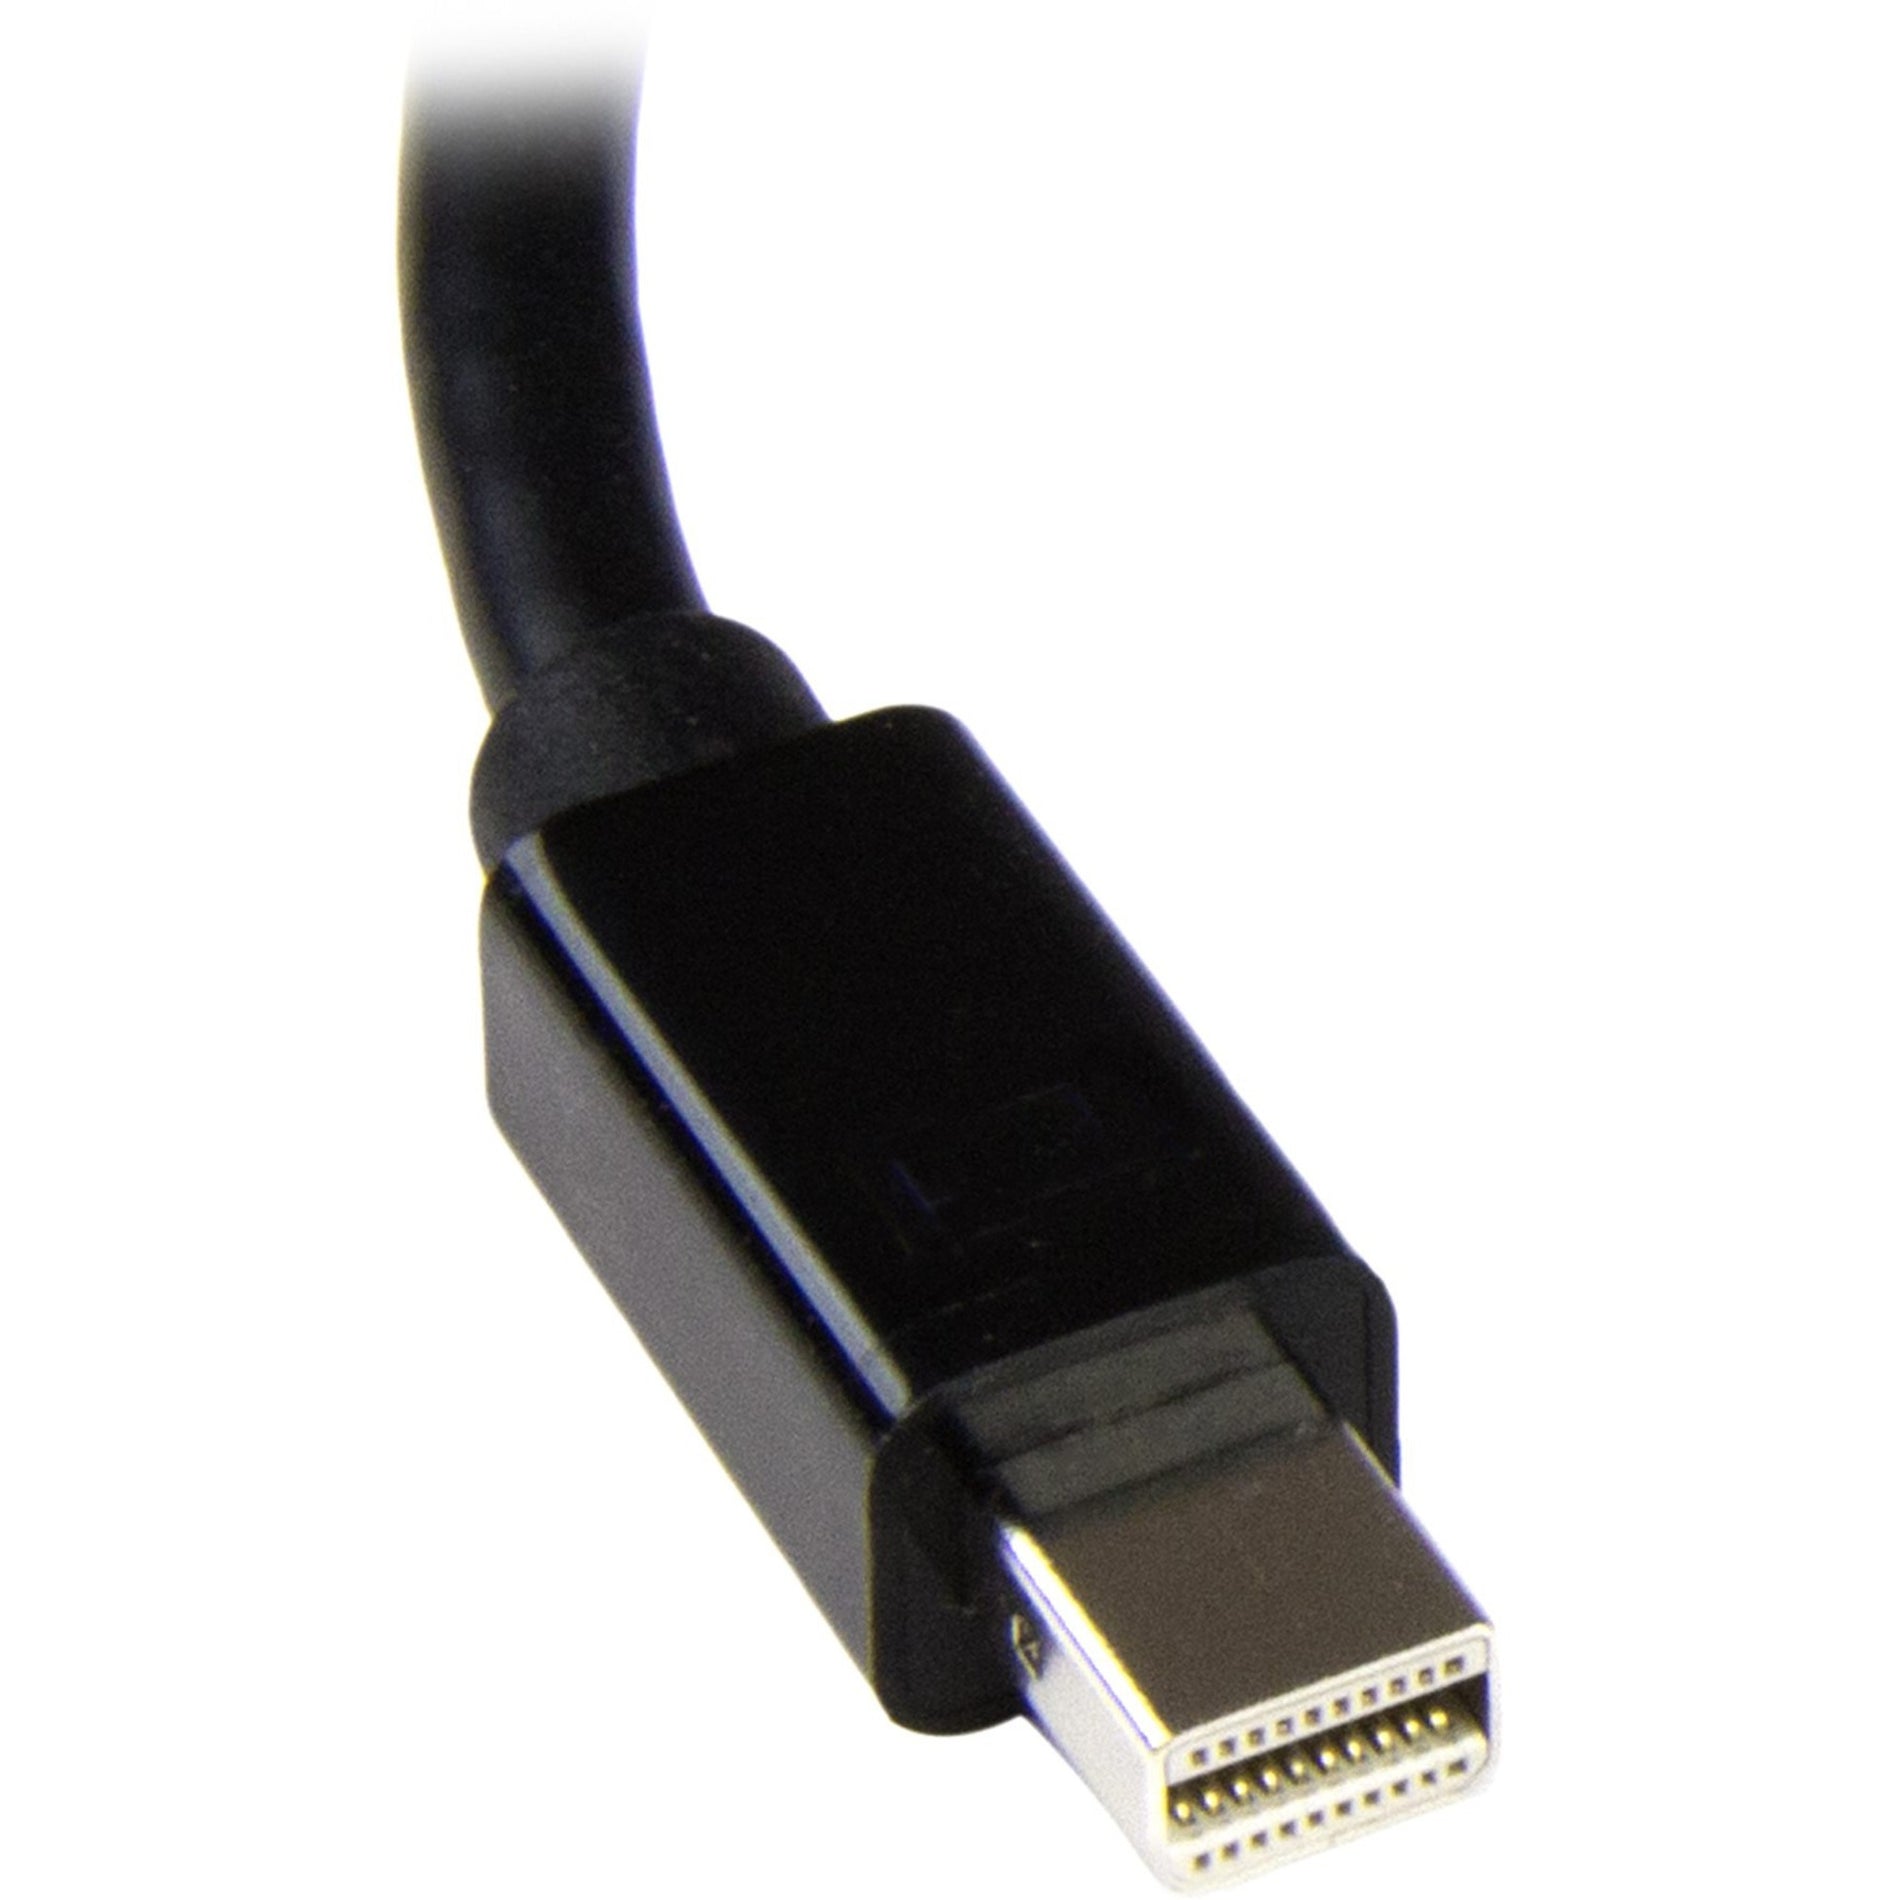 StarTech.com MDP2VGAA Mini DisplayPort to VGA Adapter with Audio - Mini DP to VGA Converter, 1920x1200